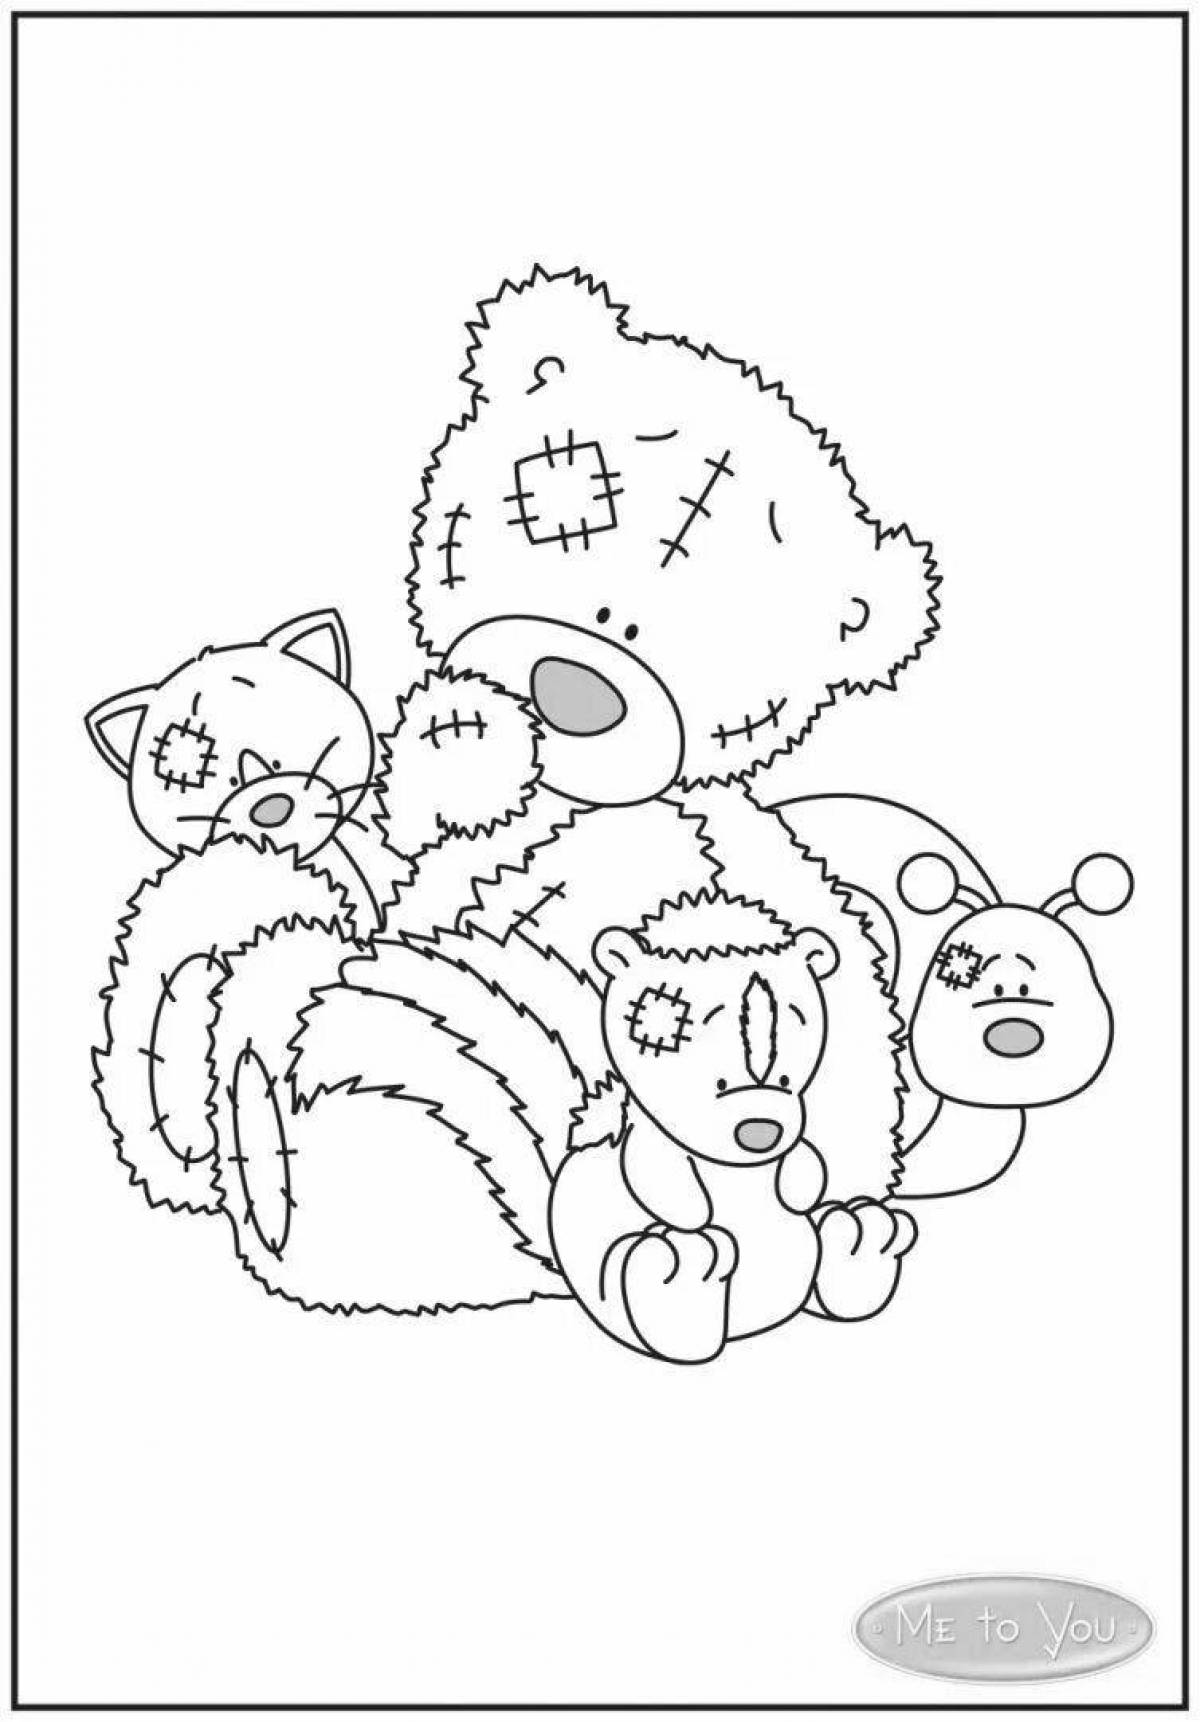 Coloring huggable teddy